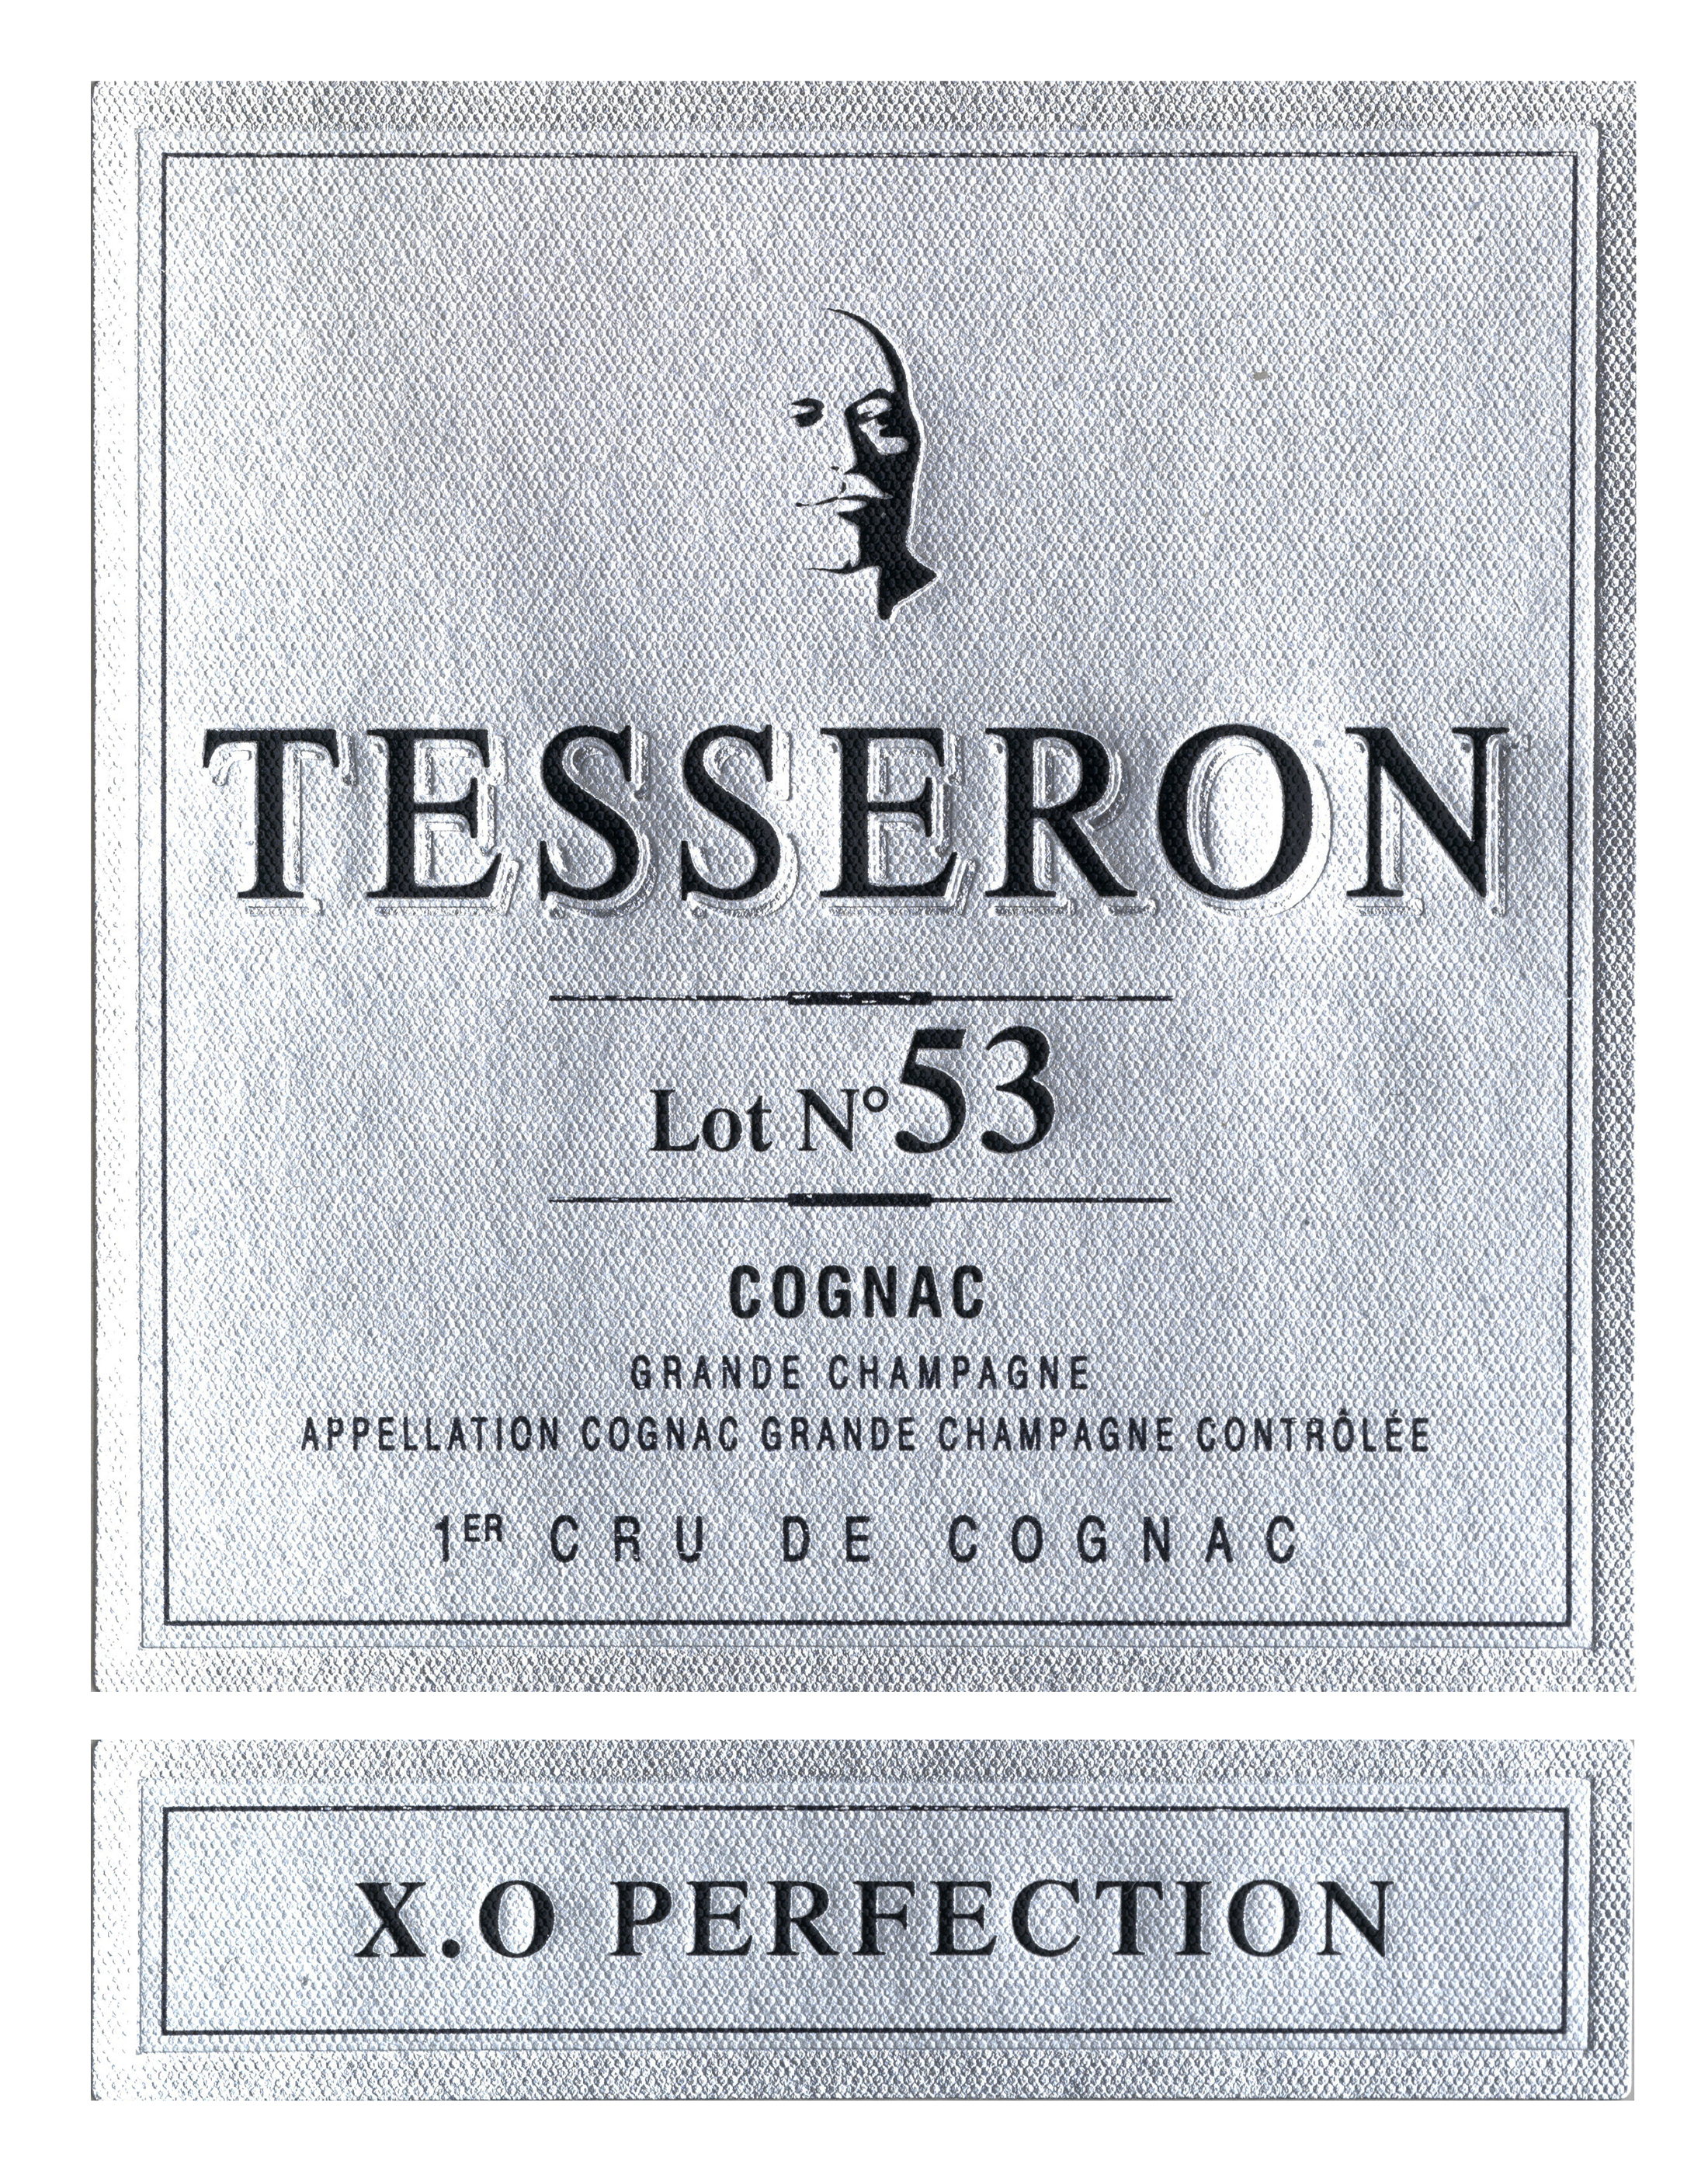 Cognac Tesseron - X.O Perfection - Lot 53 label